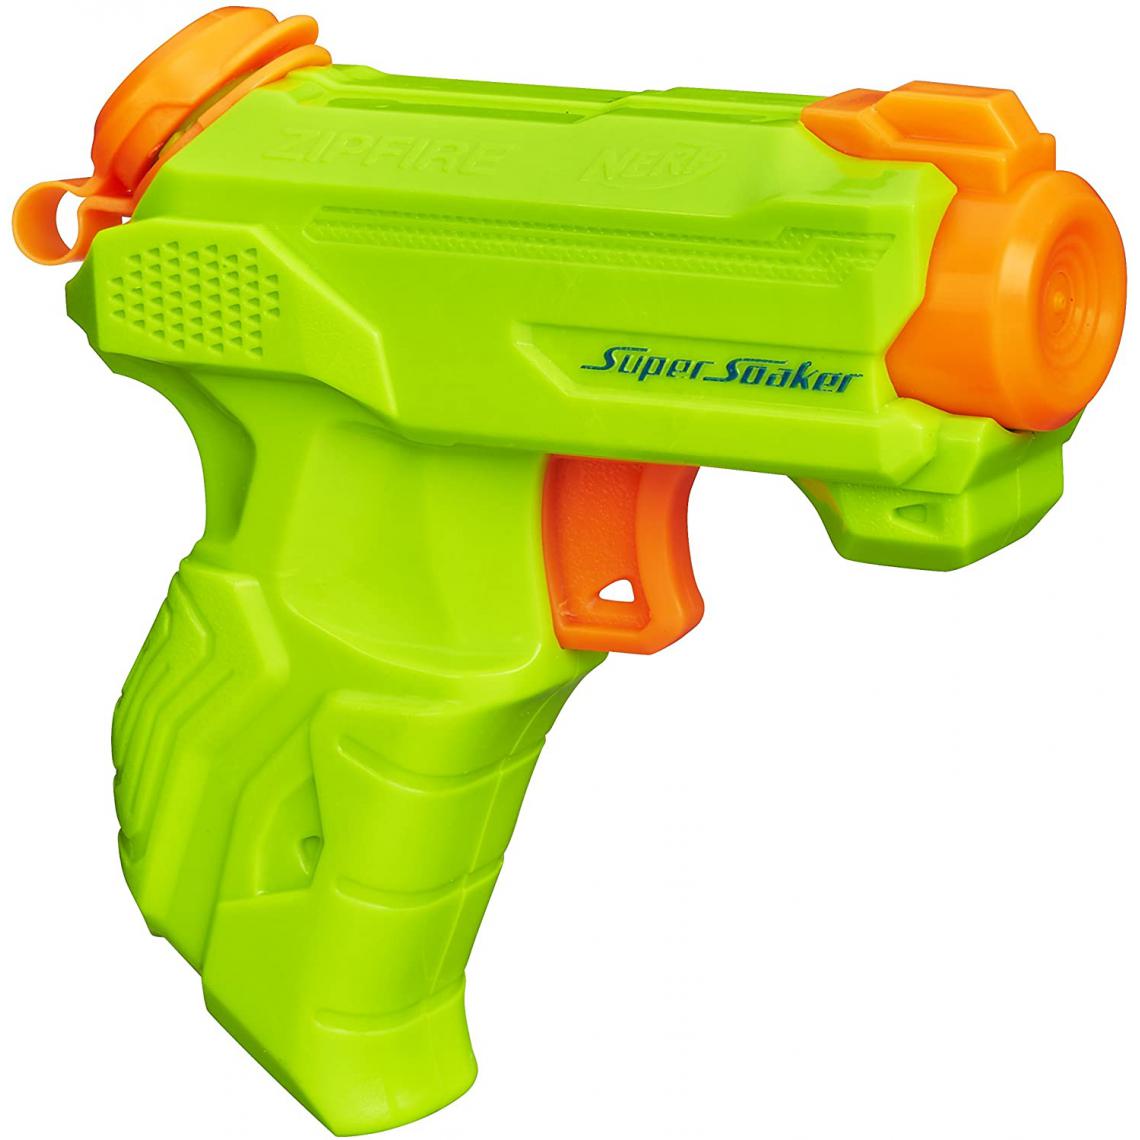 Nerf - pistolet soa zipfire vert orange - Jeux d'adresse